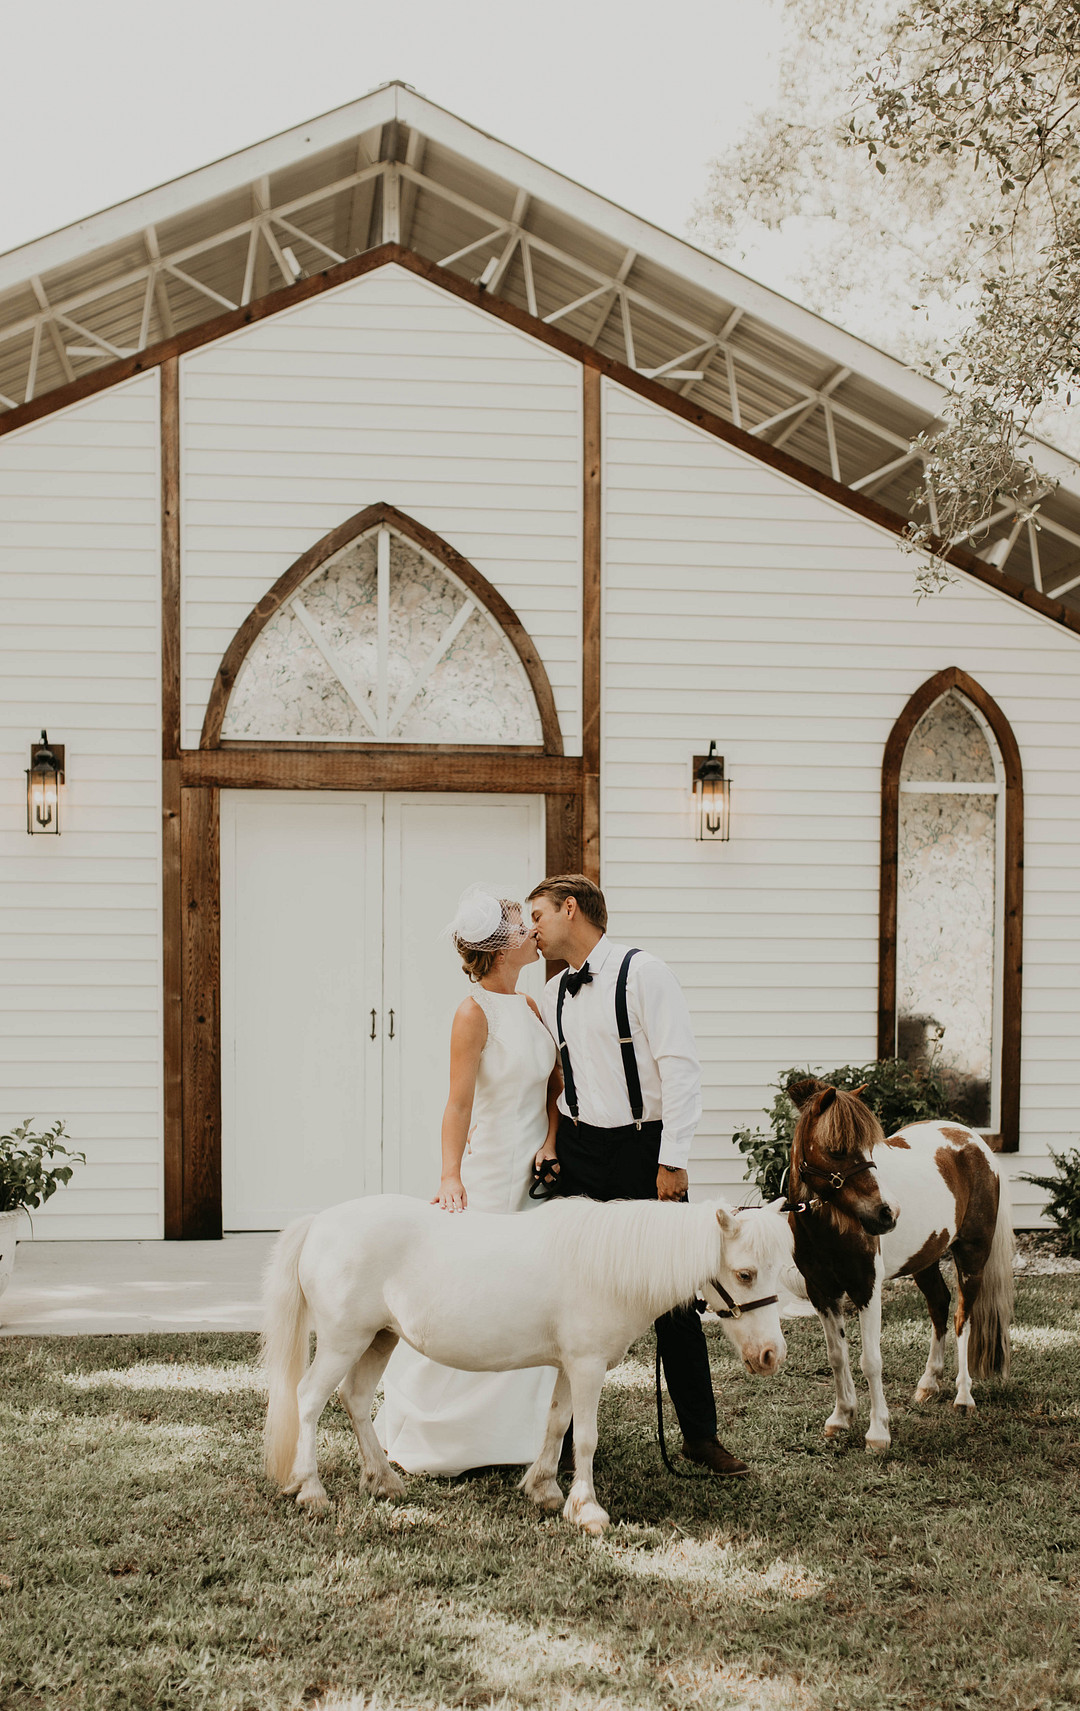 Rustic Florida Farm Wedding At Cattleya Chapel - Florida Wedding Inspiration